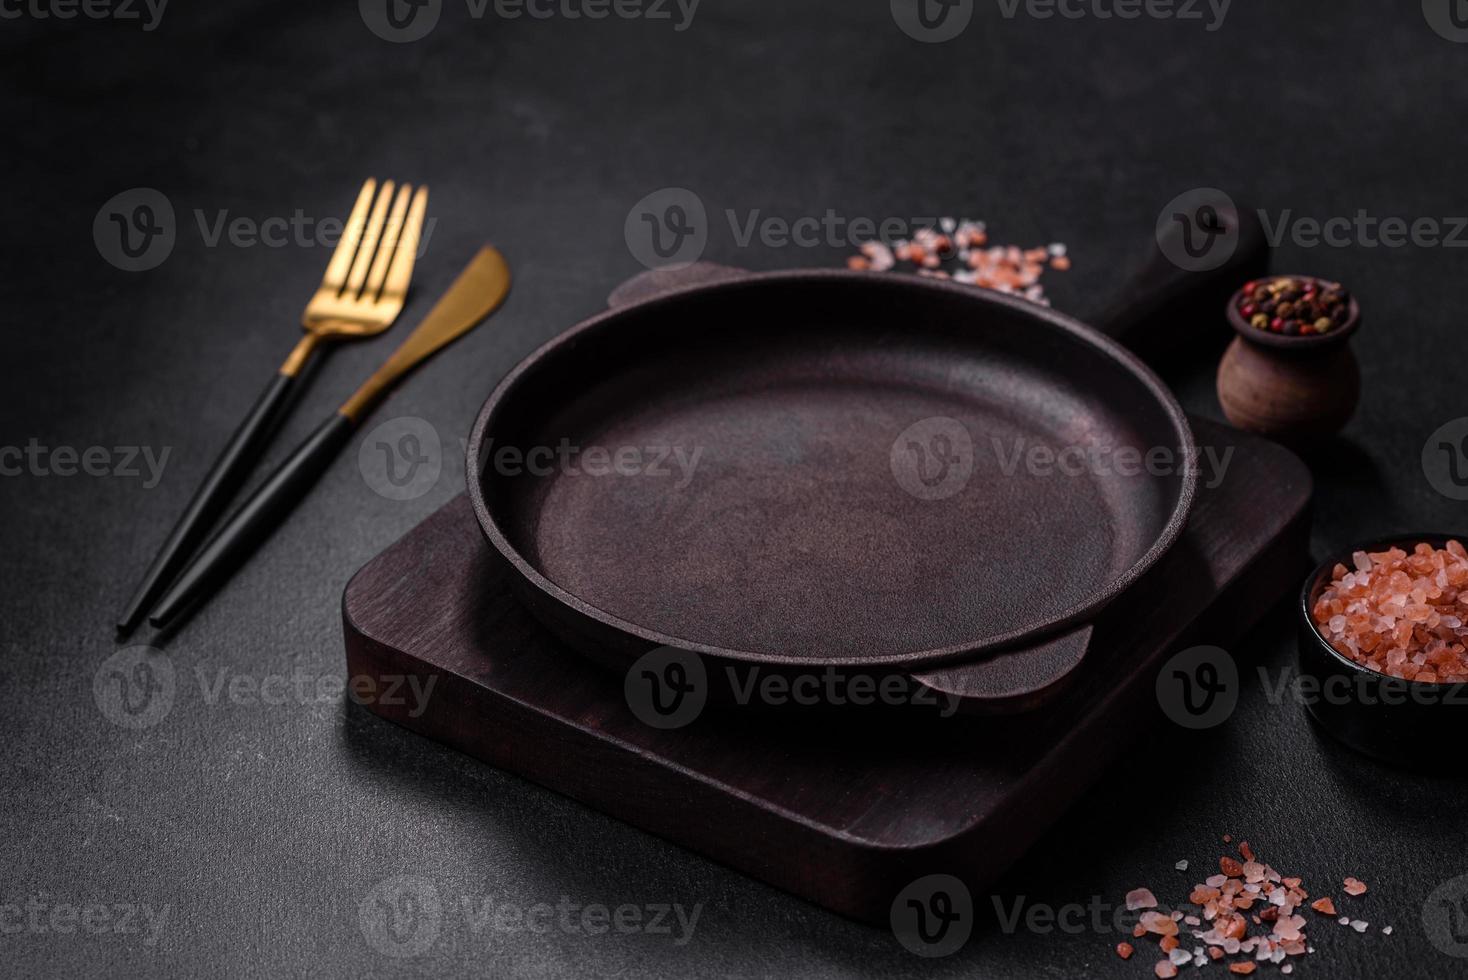 Brown iron empty pan with kitchen utensils on a dark concrete background photo